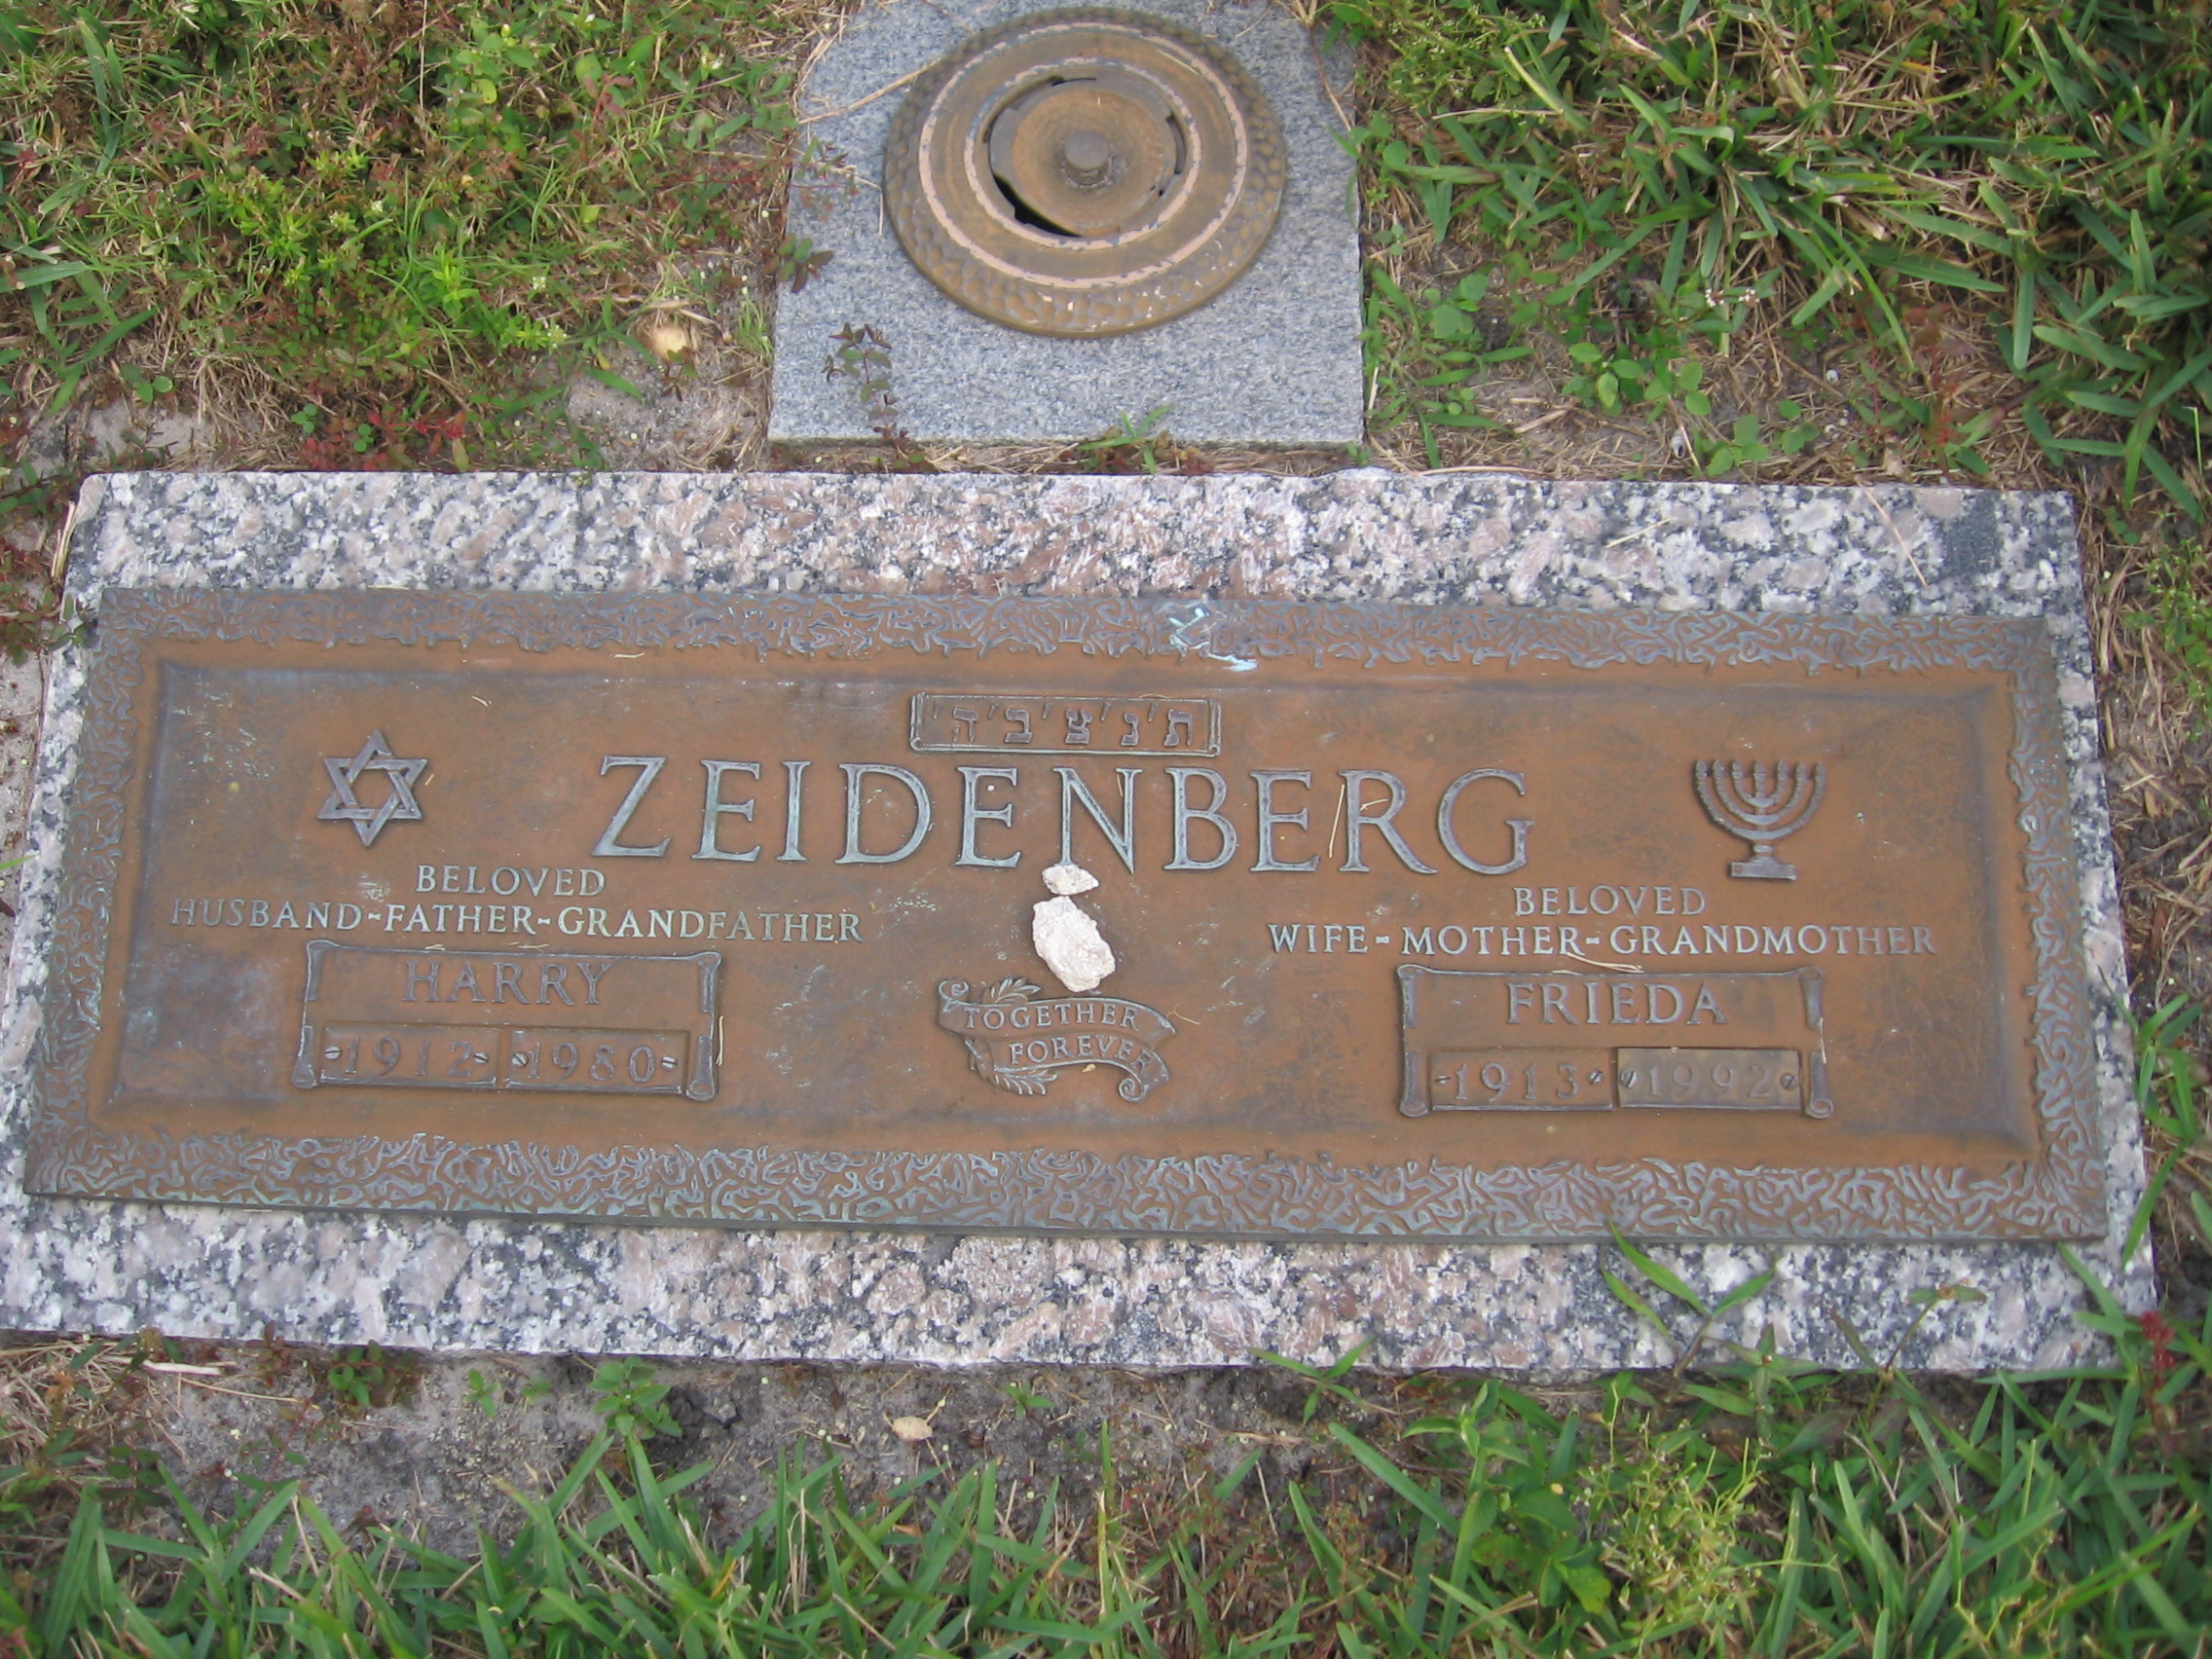 Harry Zeidenberg